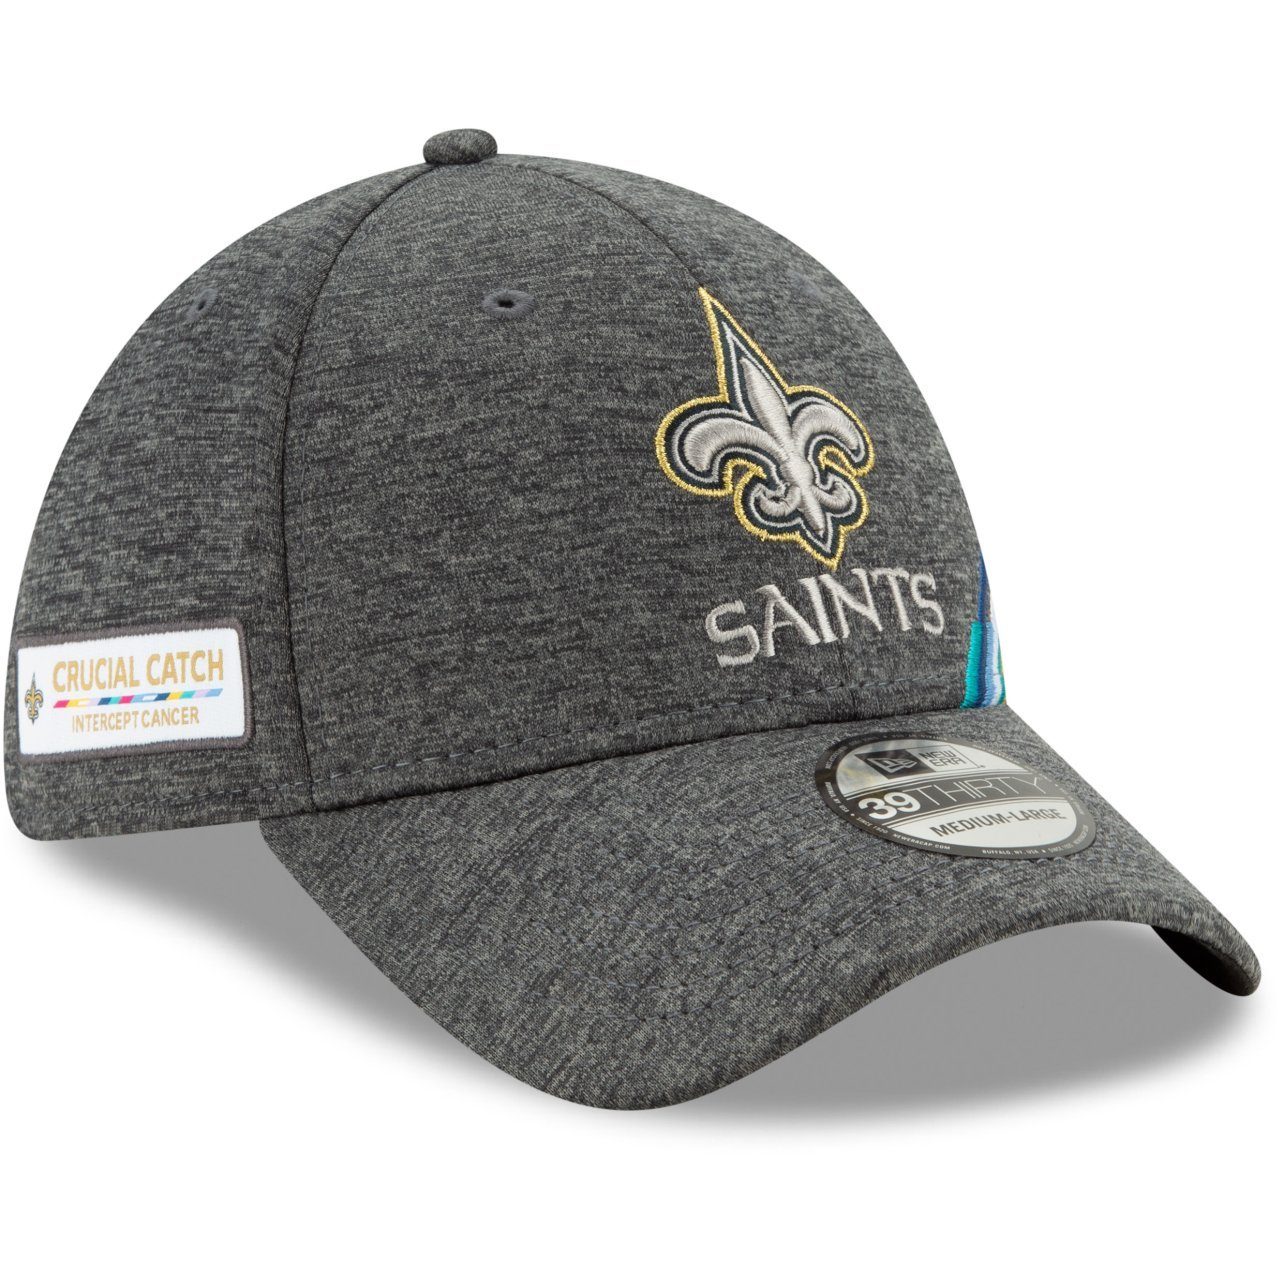 New Era Flex Cap 39Thirty NFL Saints Teams StretchFit Orleans New CATCH CRUCIAL